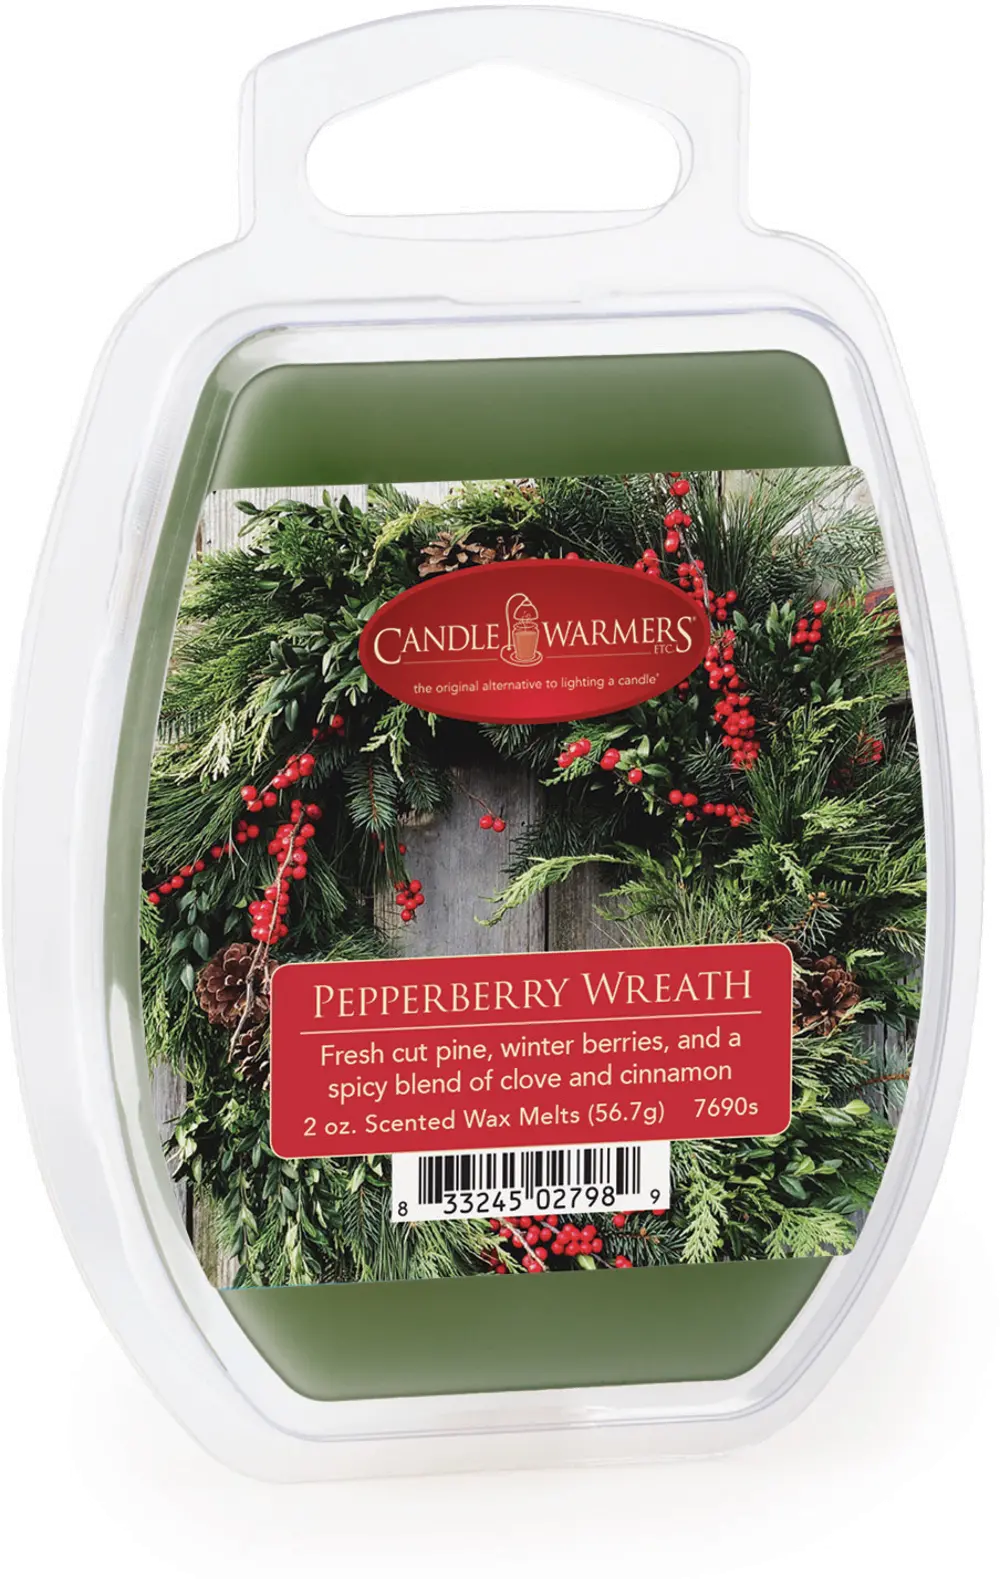 Pepperberry Wreath 2oz Wax Melt - Candle Warmers-1